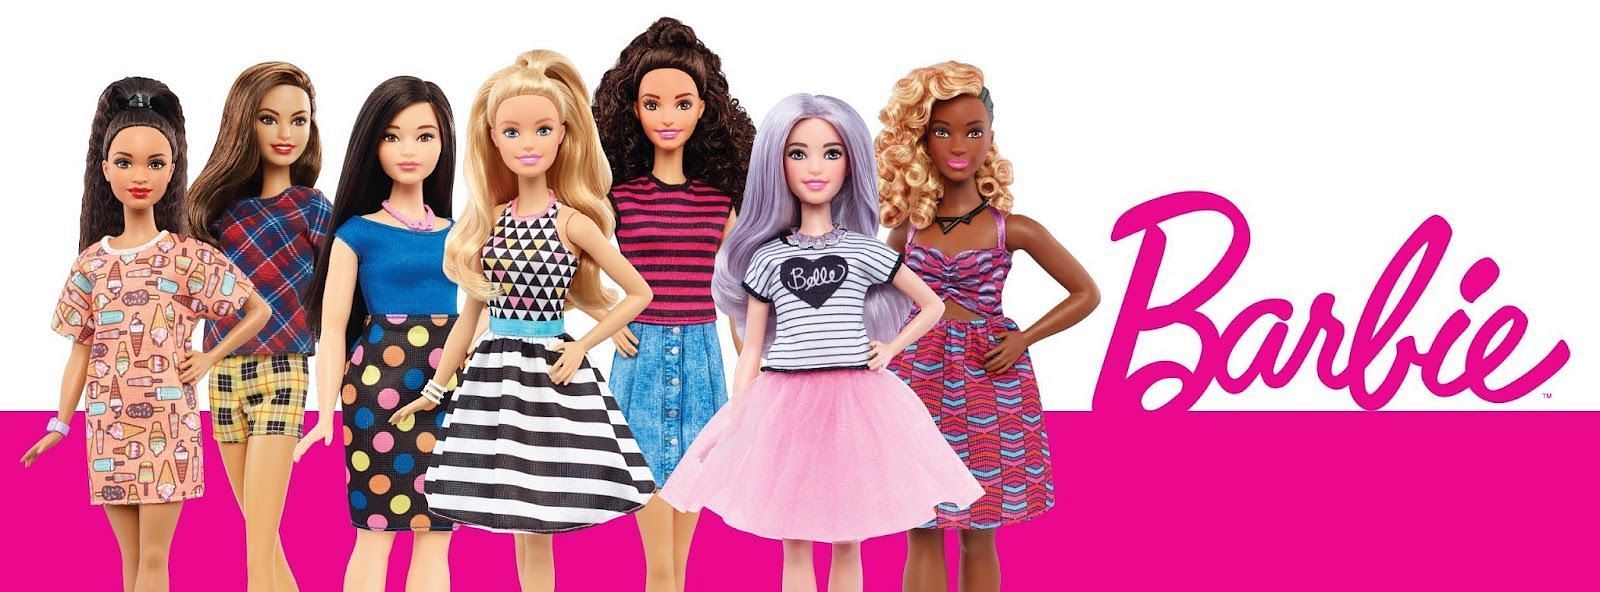 Who created Barbie?